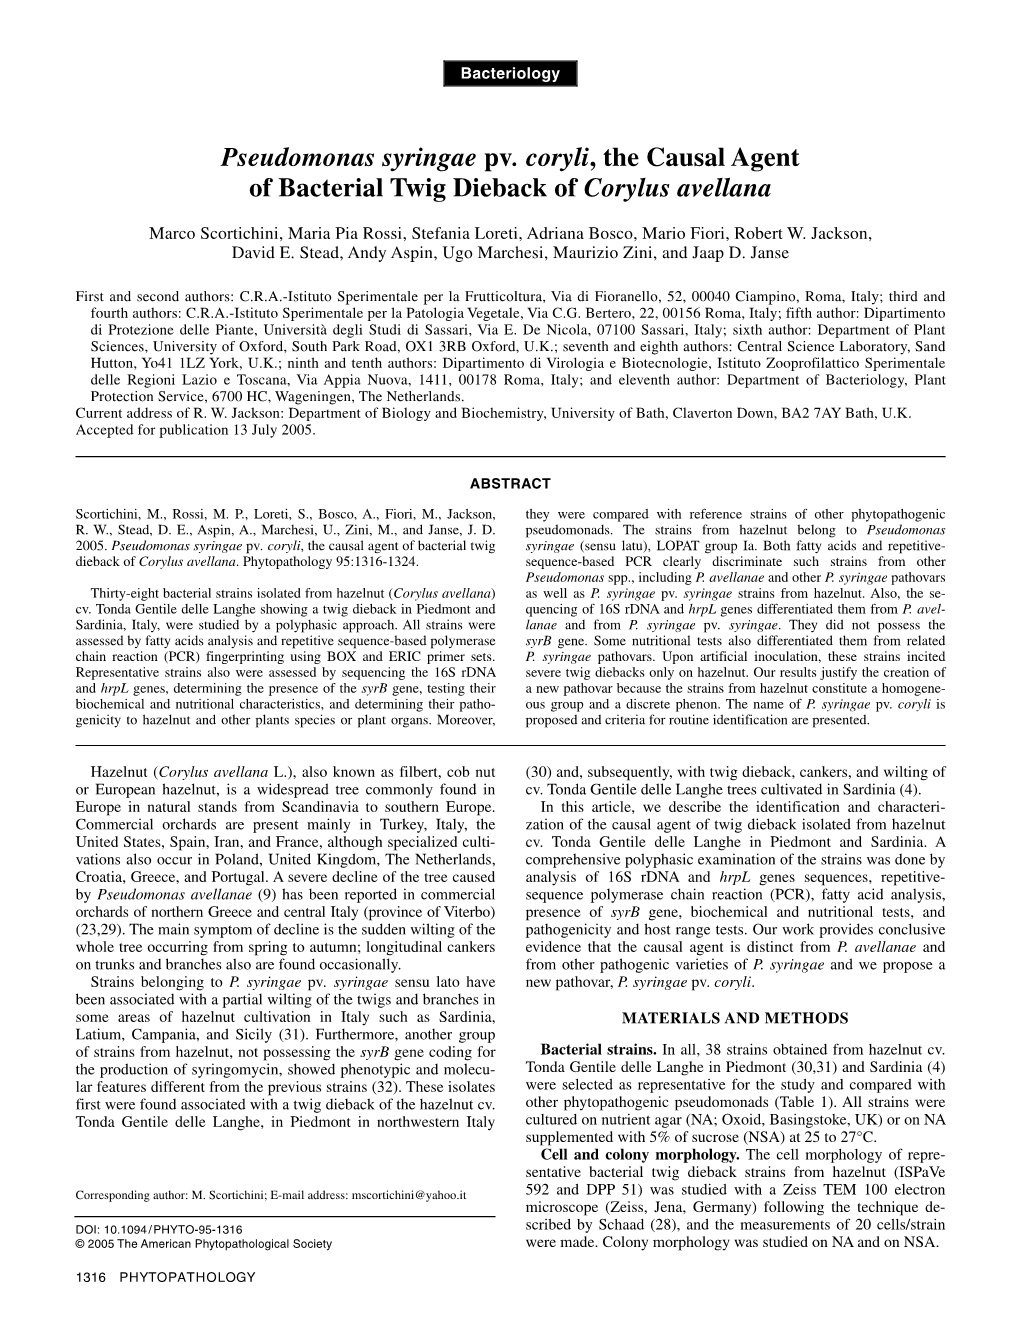 Pseudomonas Syringae Pv. Coryli, the Causal Agent of Bacterial Twig Dieback of Corylus Avellana